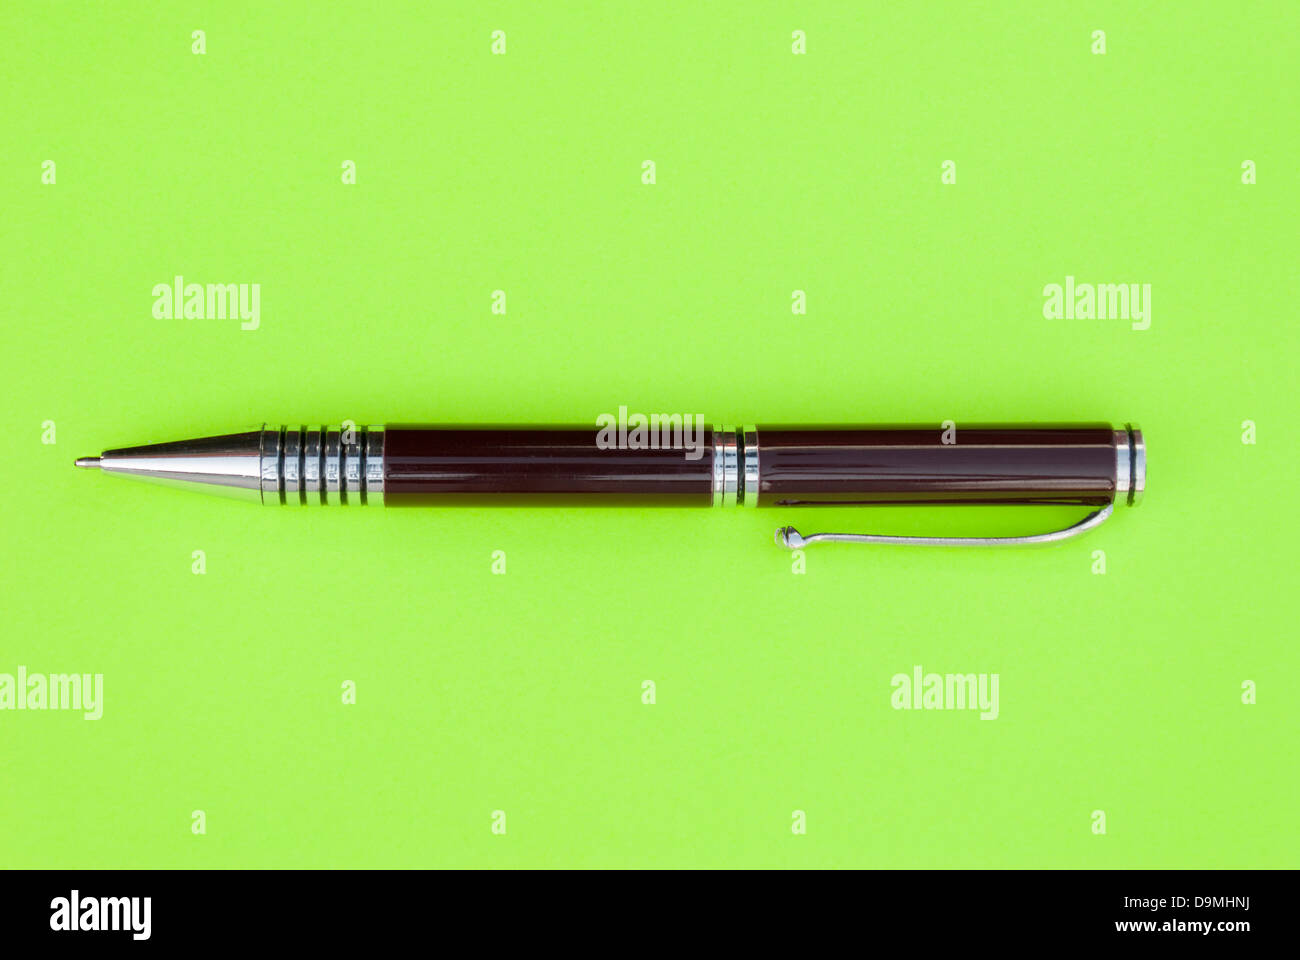 Ballpoint pen on a green sheet of paper Stock Photo